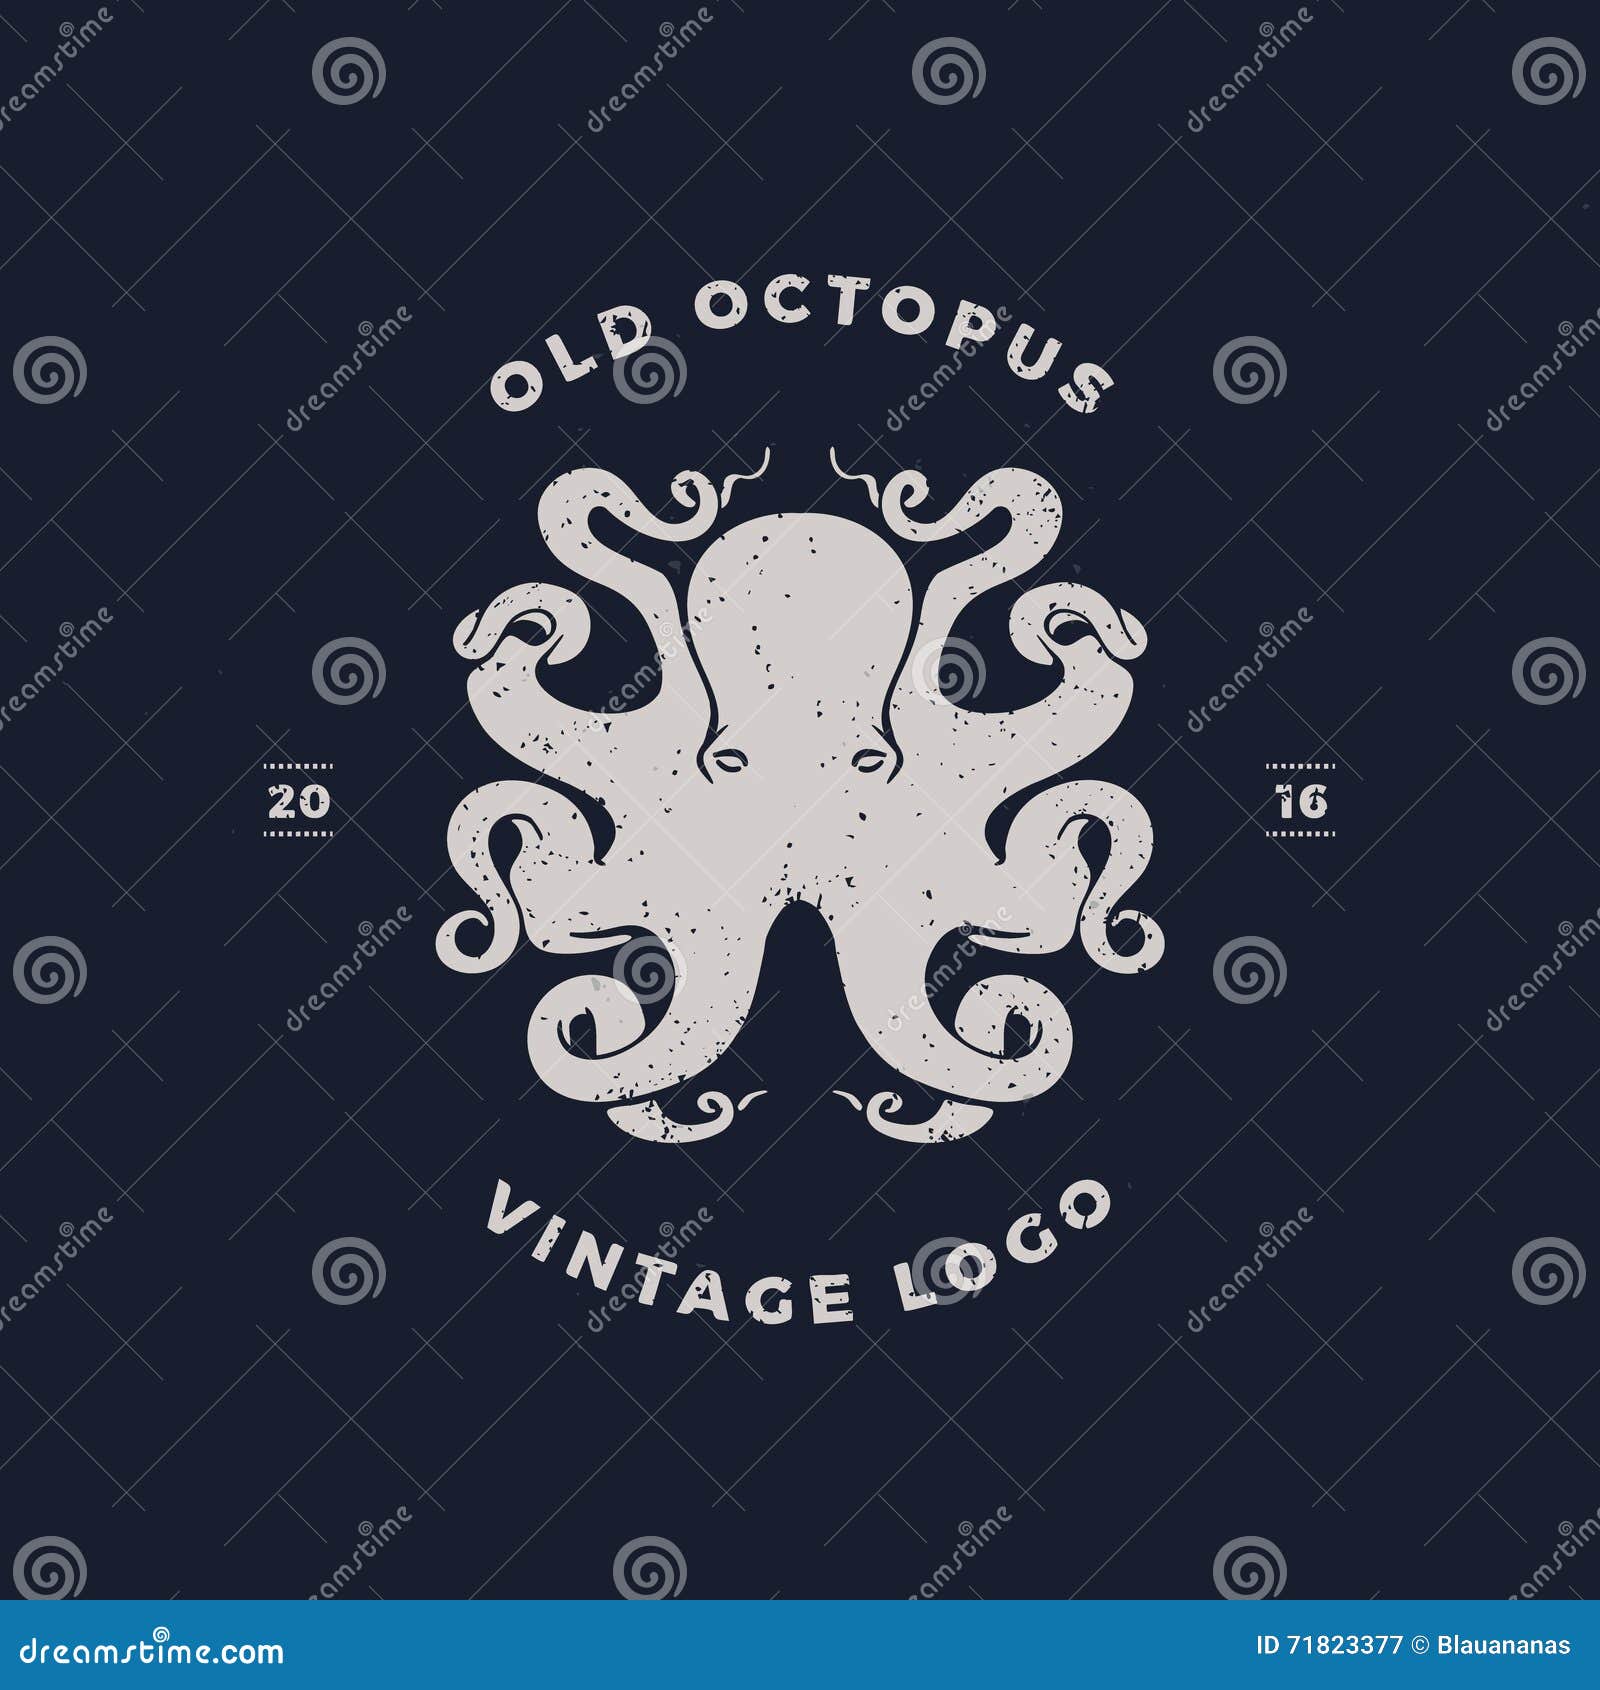 octopus silhouette logo invert